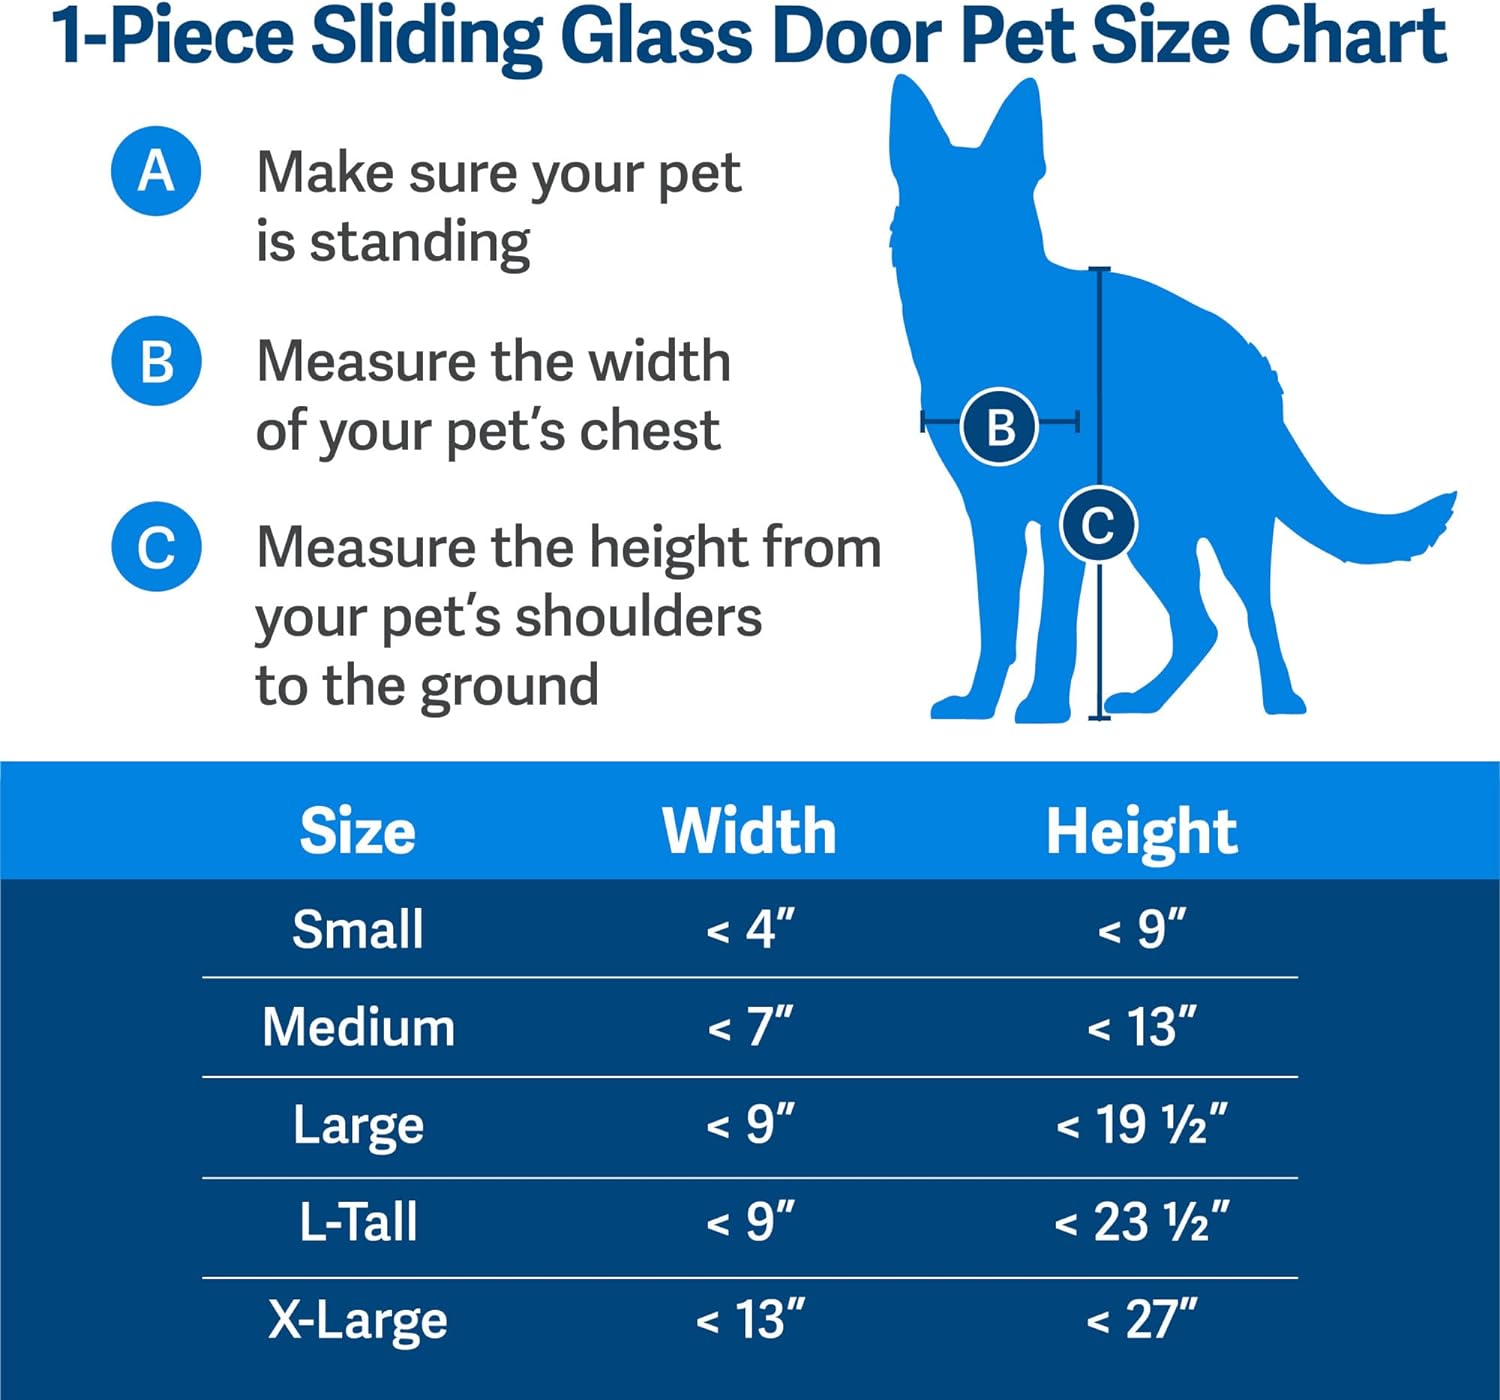 PetSafe 1-Piece Sliding Glass Pet Door for Dogs & Cats -  91 7/16" to 96" - $175